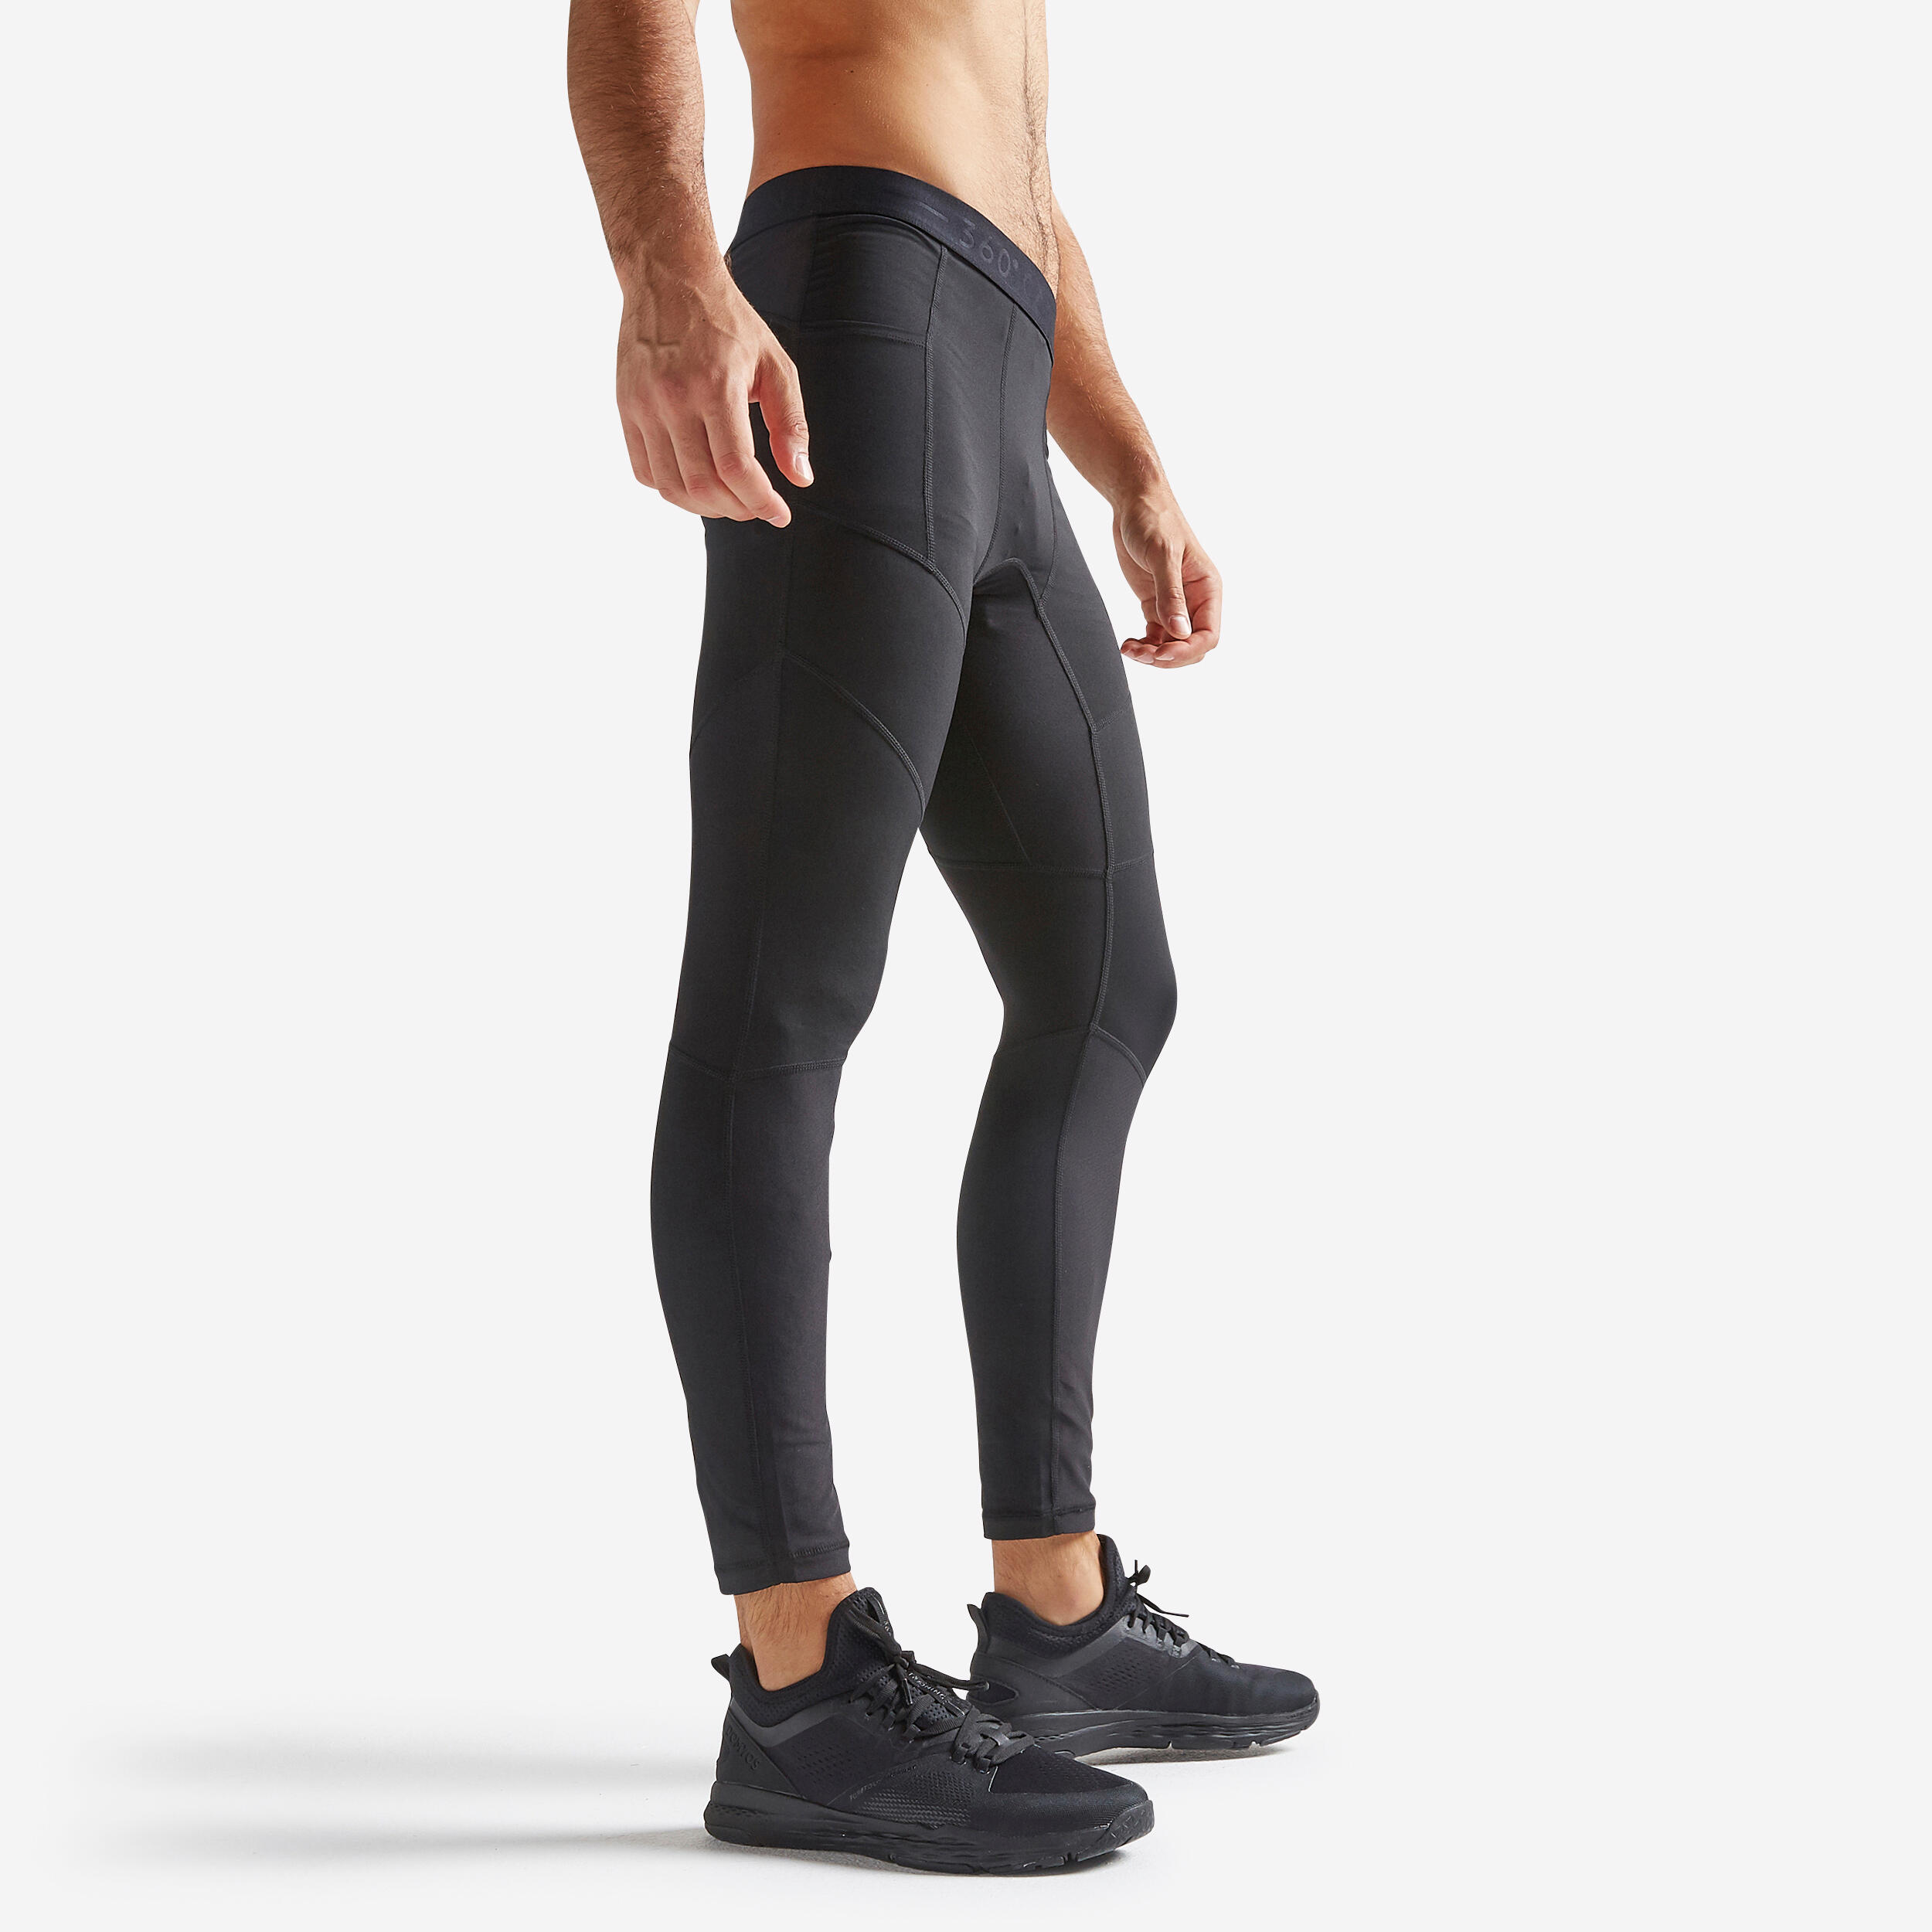 Domyos 500, Fitness Cardio Training Leggings, Women's - Walmart